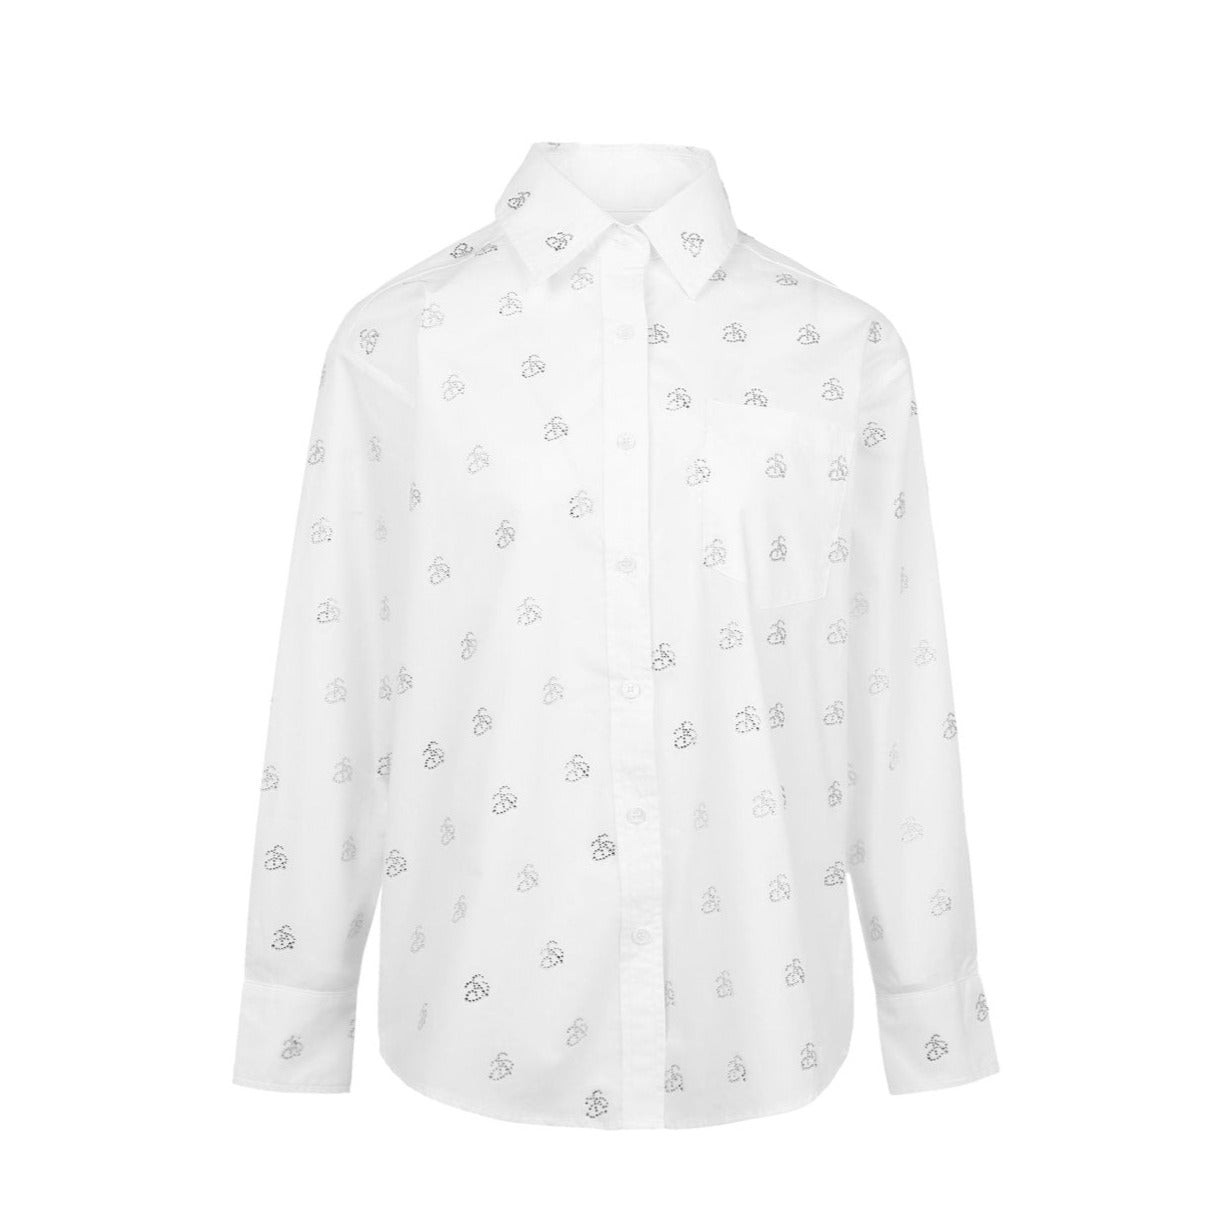 Ann Andelman White Diamante Embellished Shirt